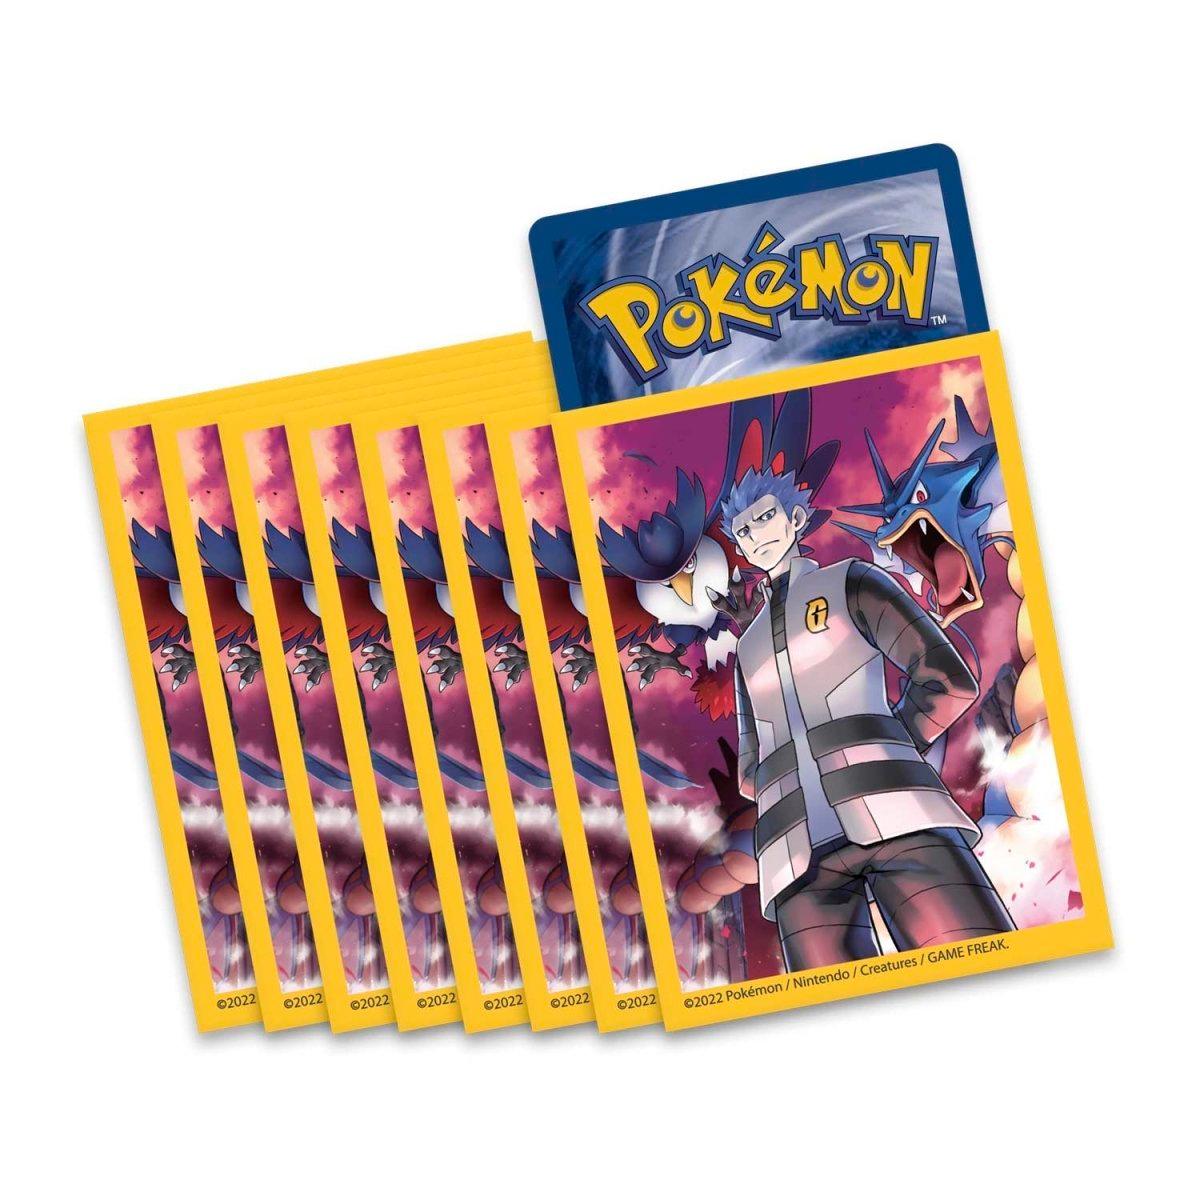 Pokemon Box - Premium Tournament Collection - Cyrus - Hobby Champion Inc